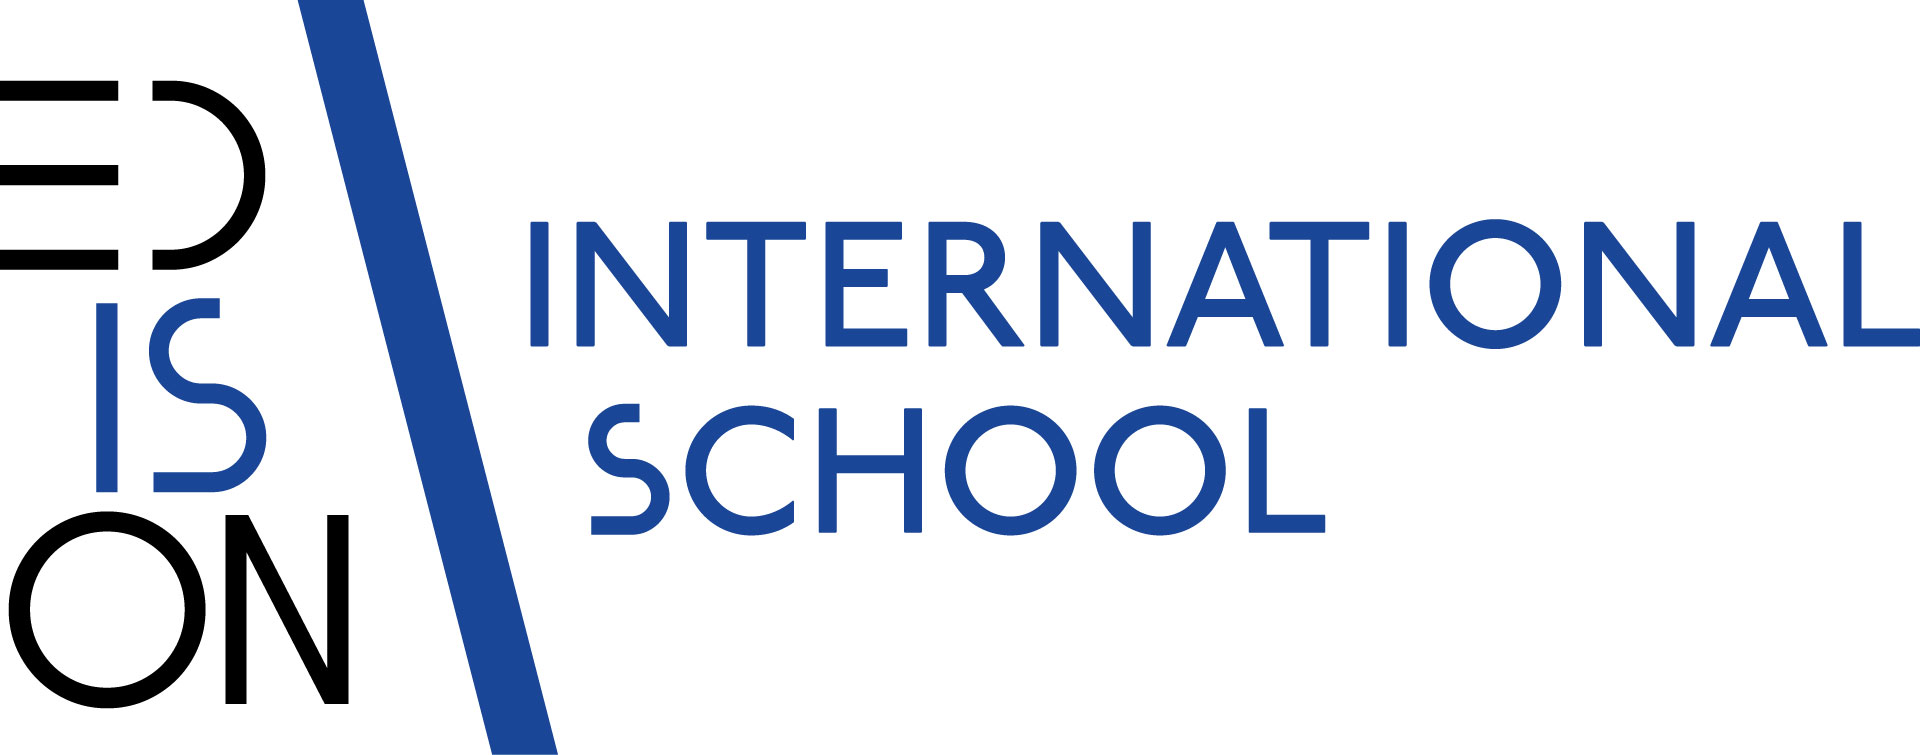 International school